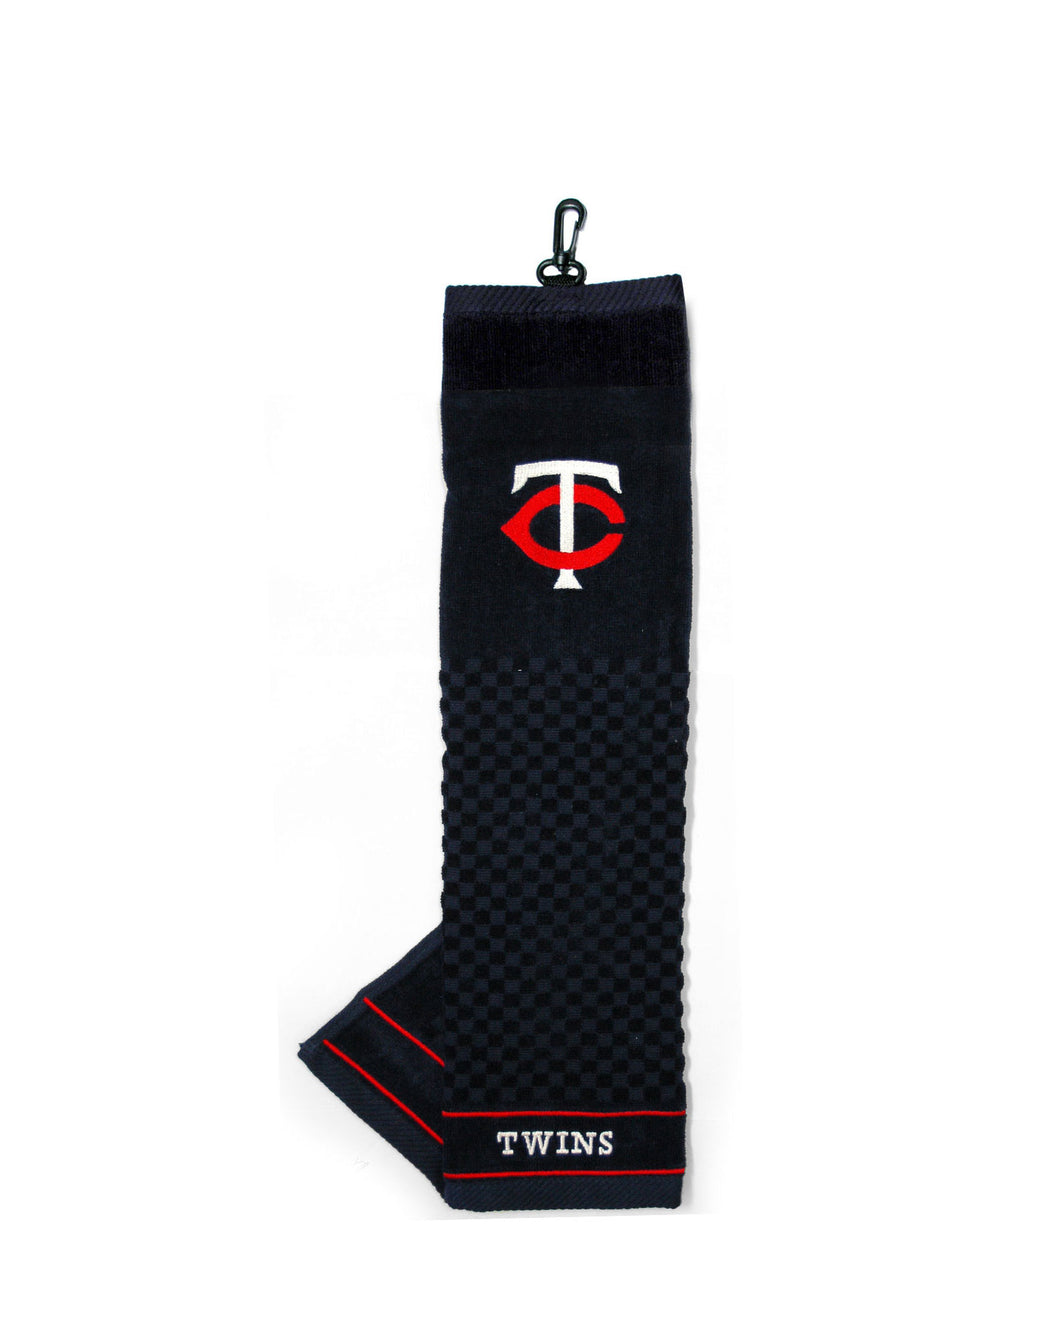 MLB Major League Baseball Official Golf Tri-Fold Towel. Minnesota Twins.